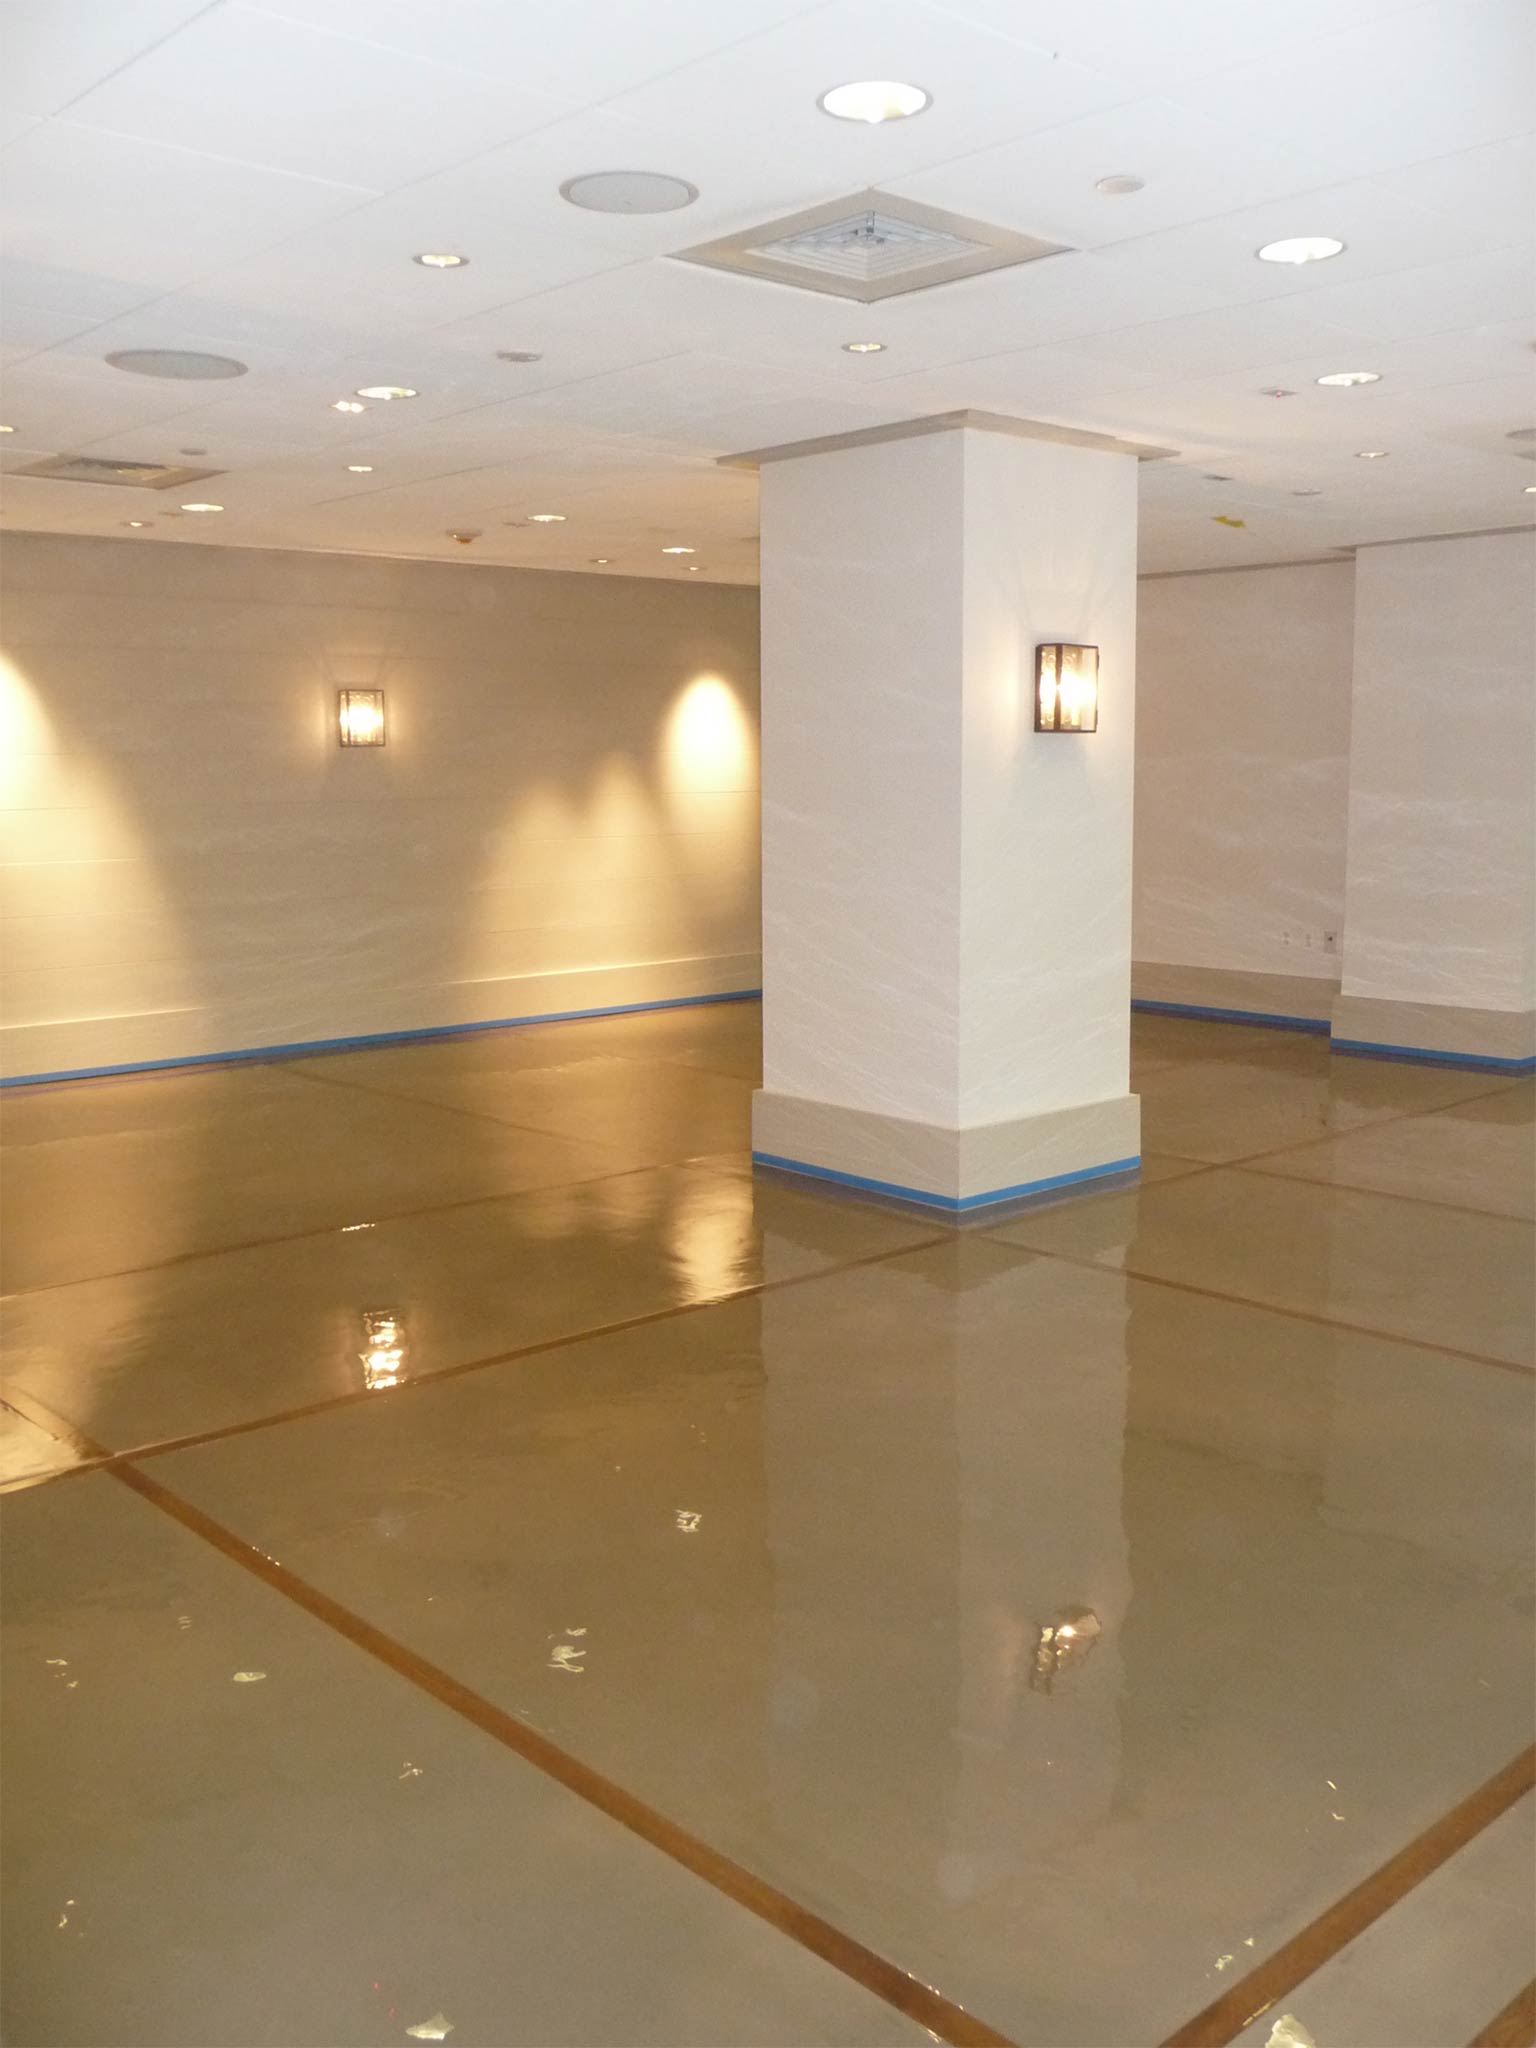 Best Flooring For Products In Dubai, Uae